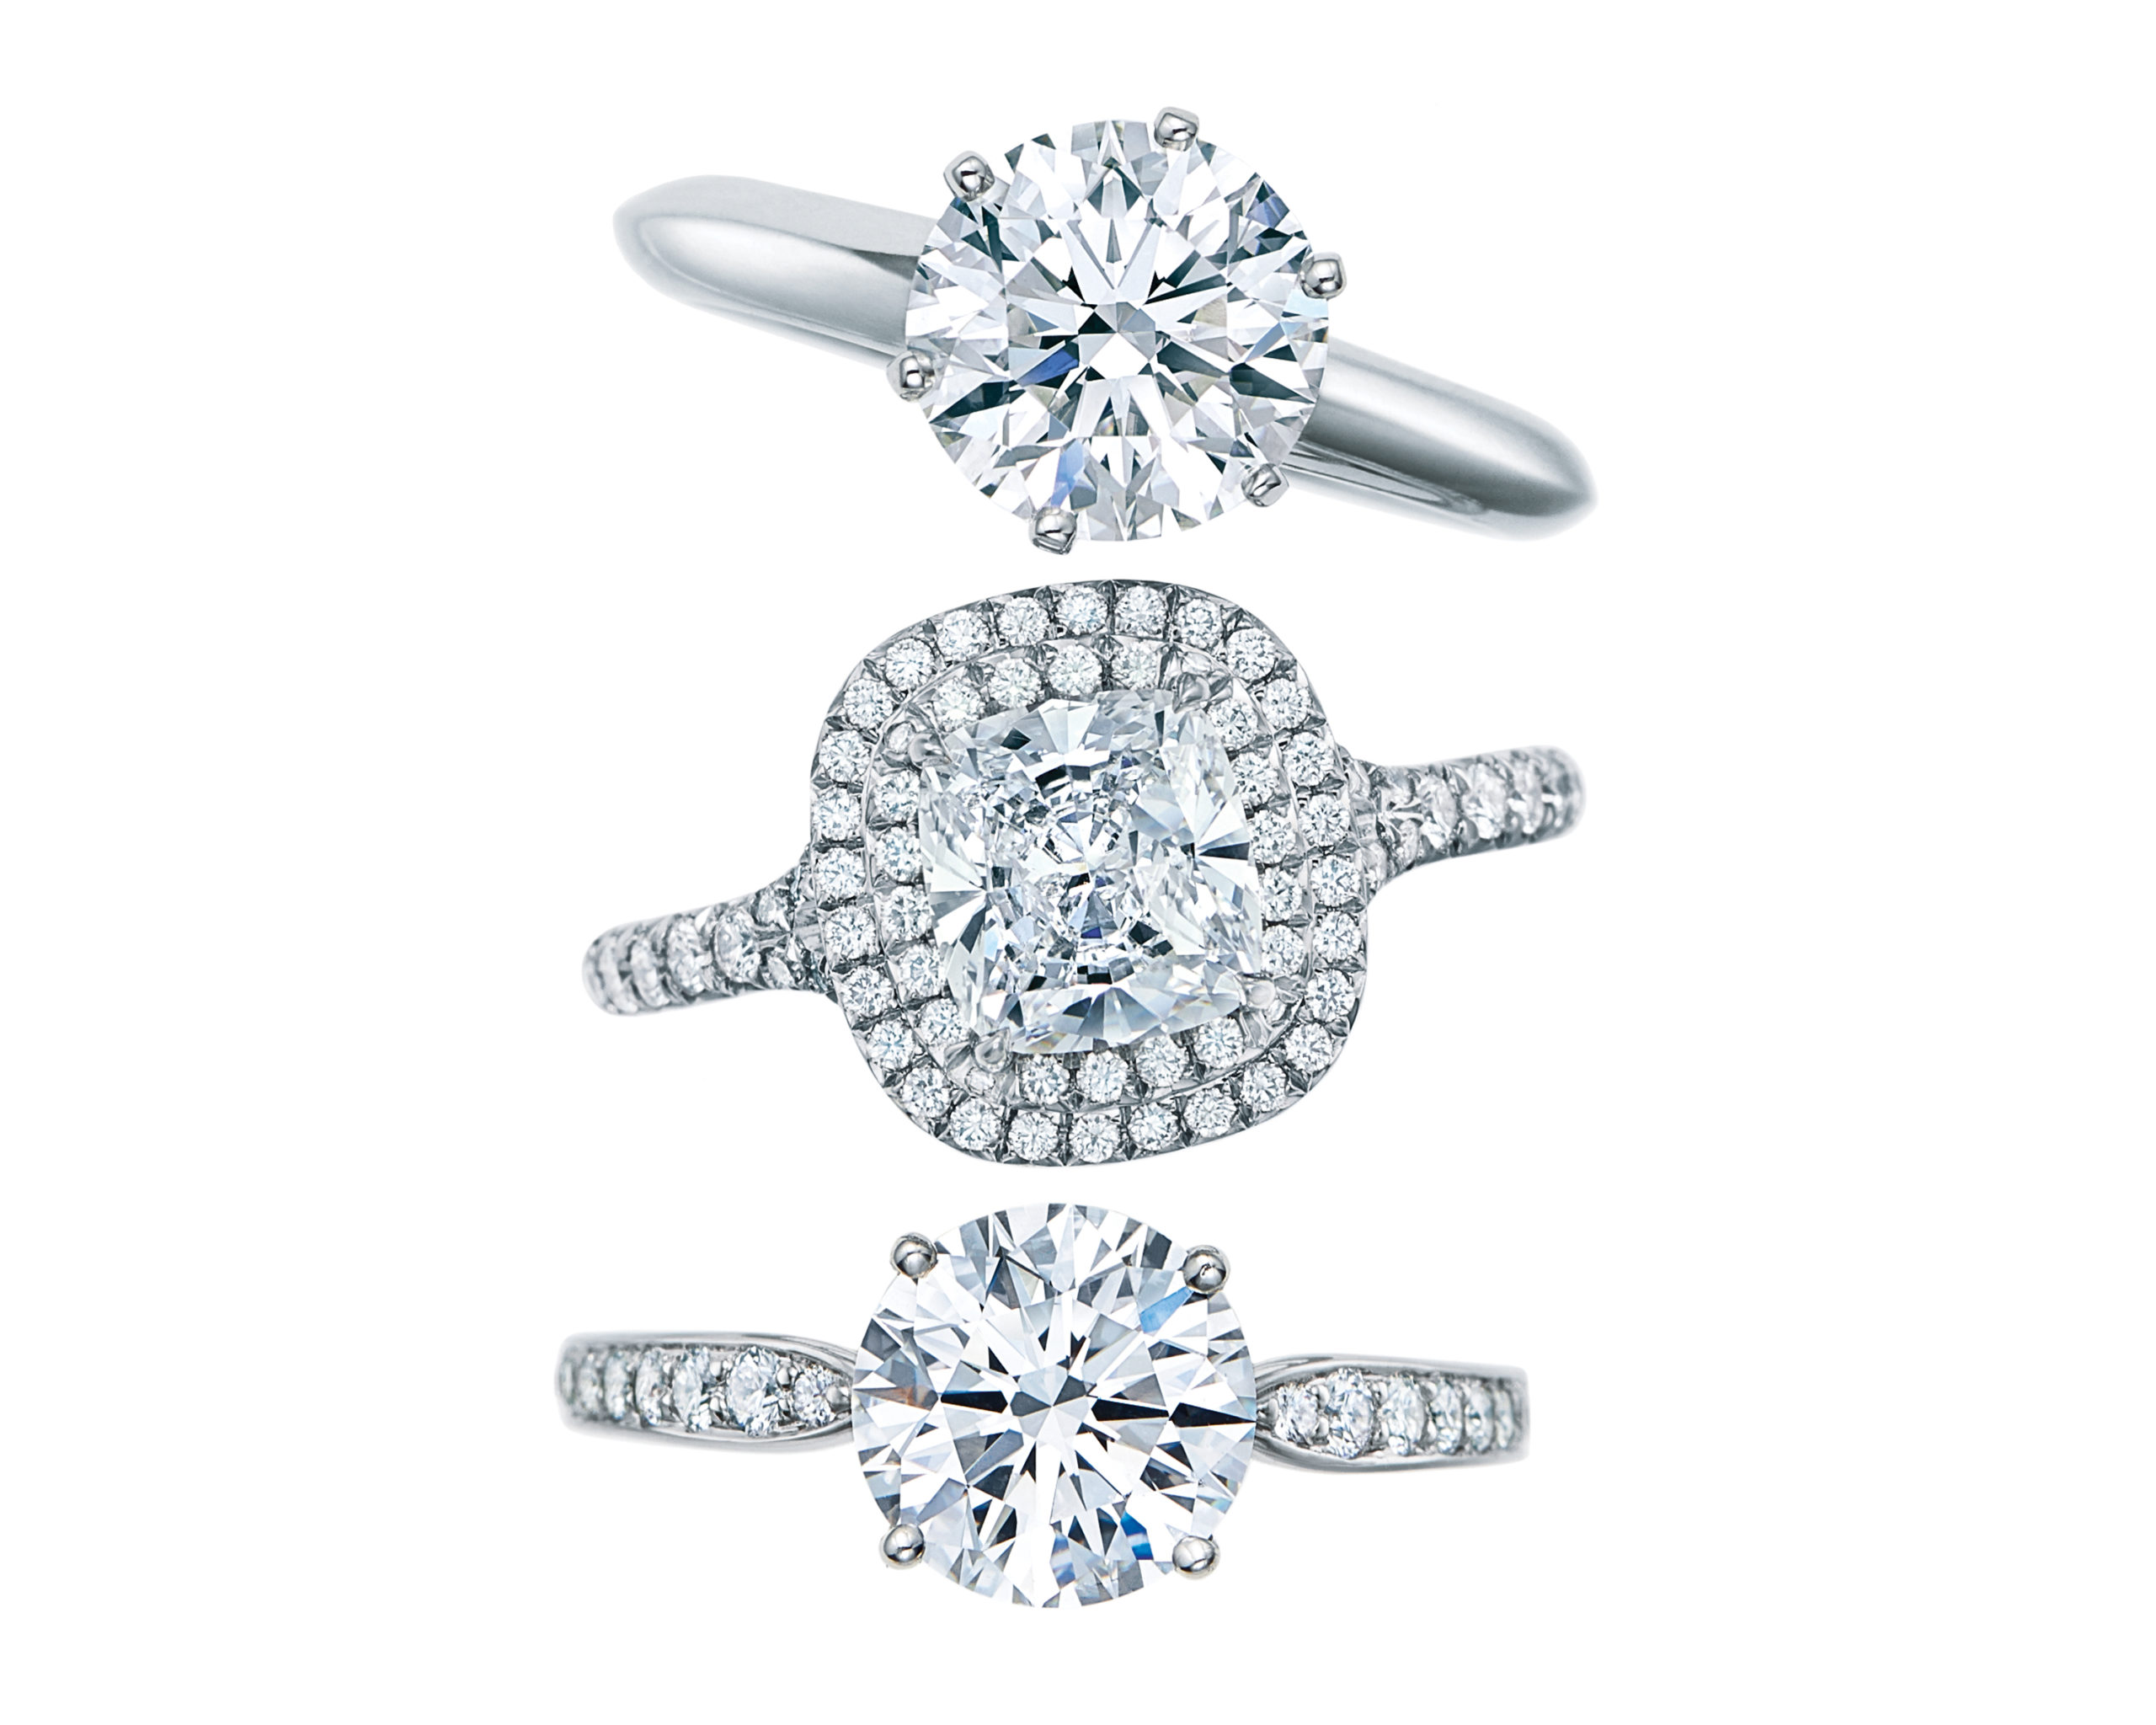 Tiffany Diamond Engagement Rings 2 Scaled 